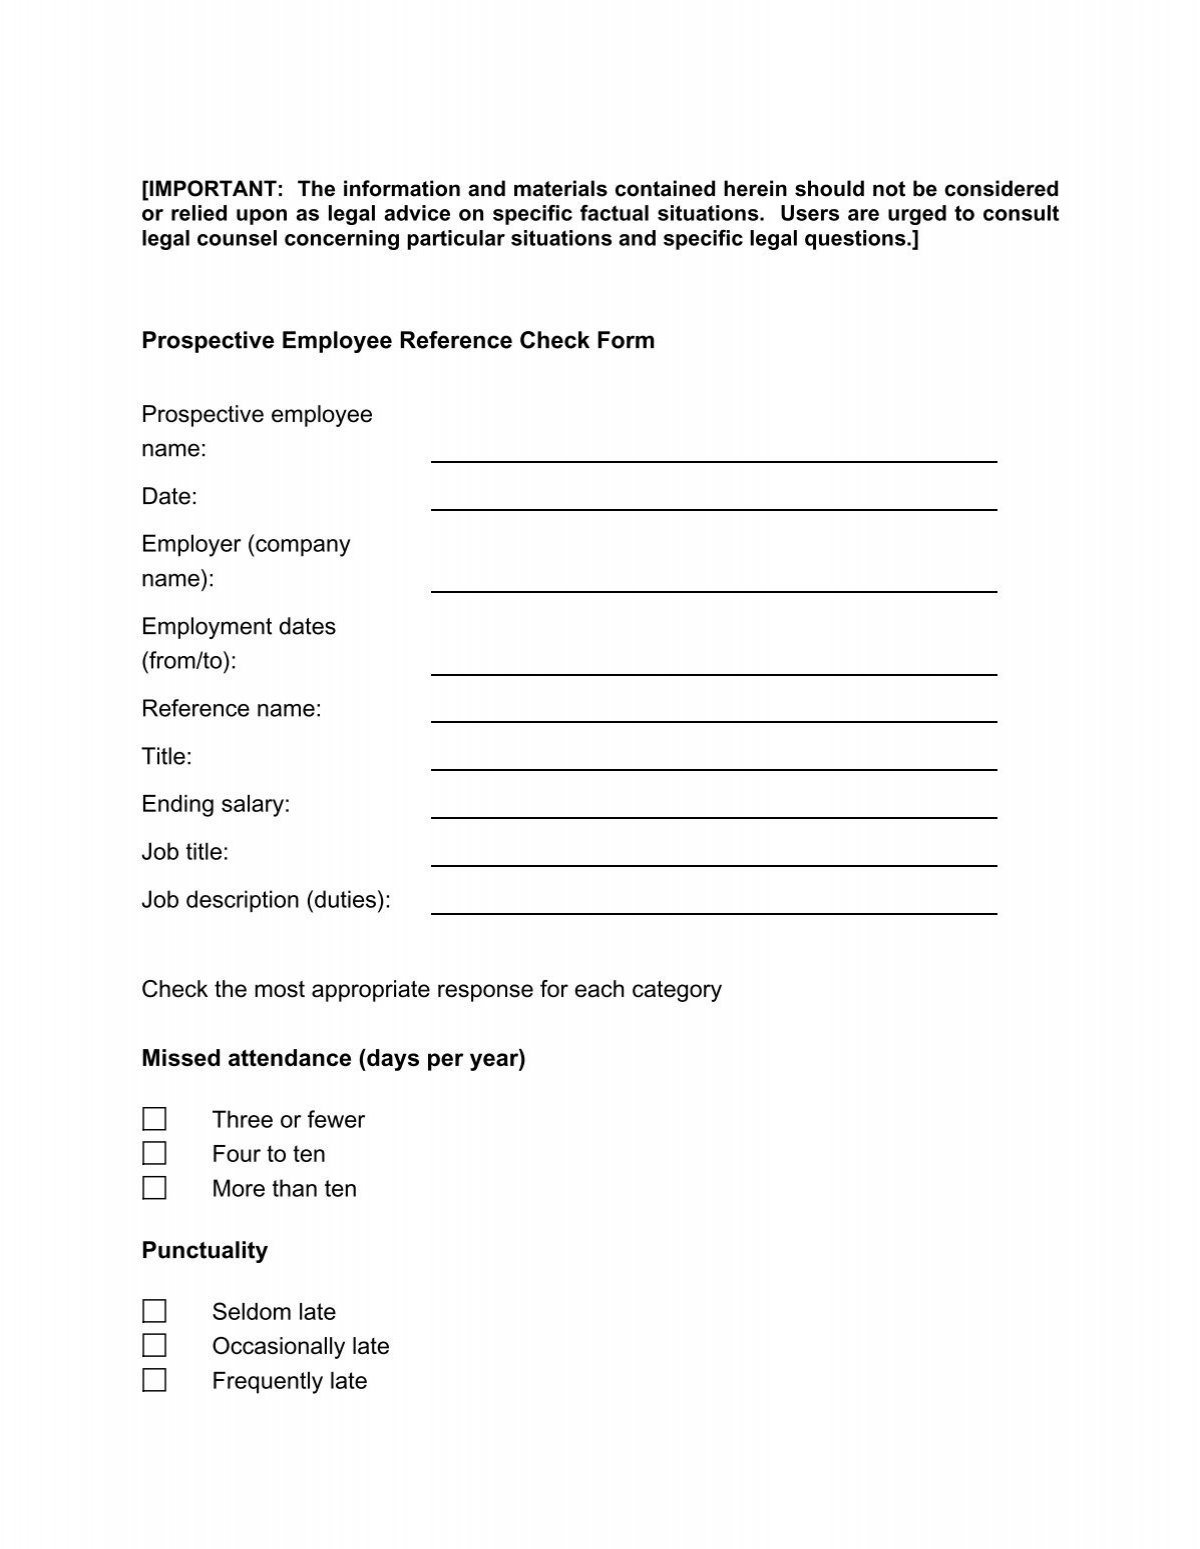 Prospective Employee Reference Check Form Prospective 7343